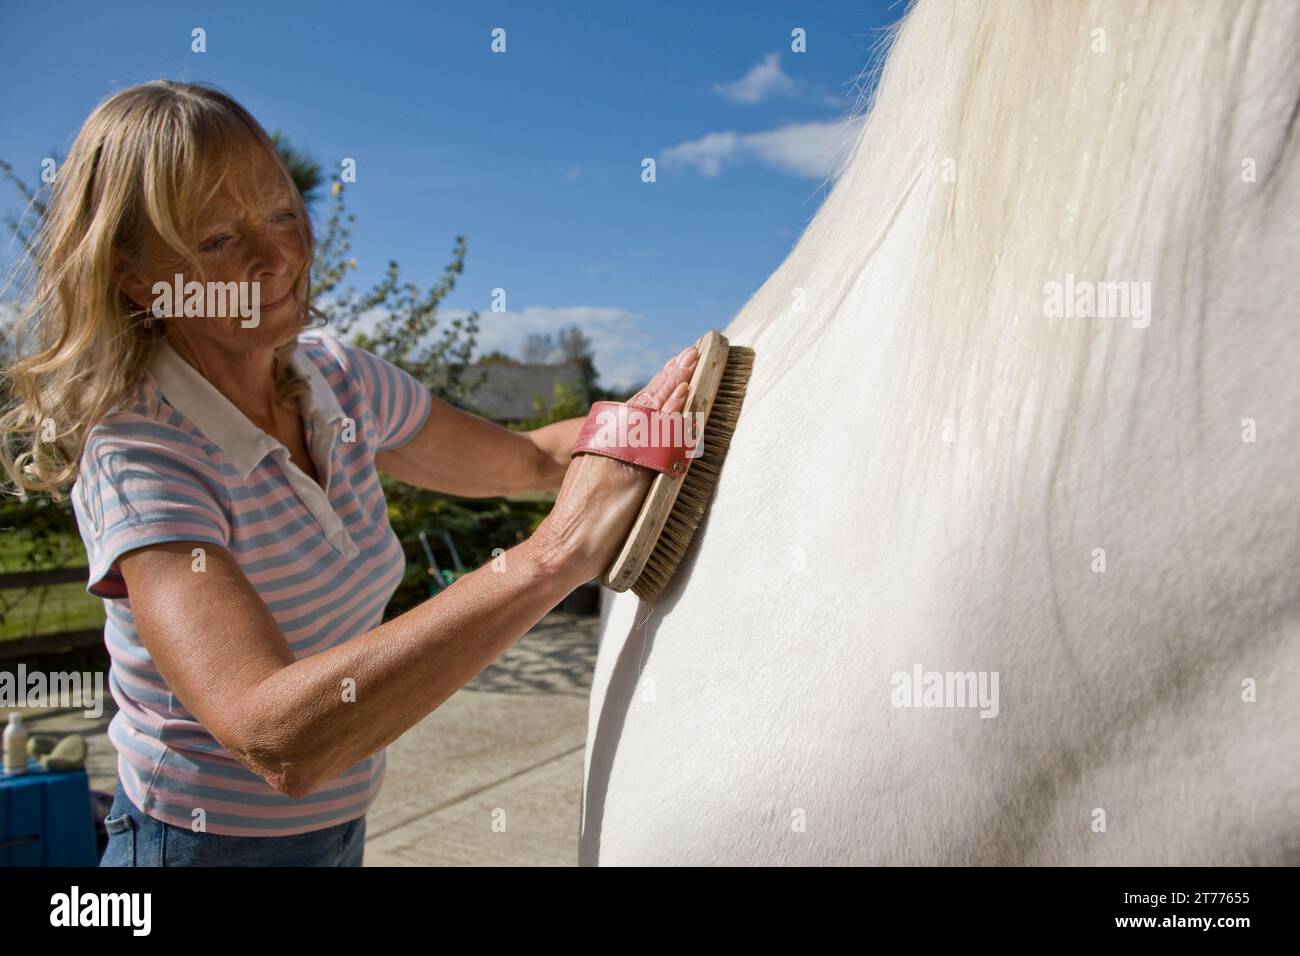 Mature woman brushing a horse Stock Photo